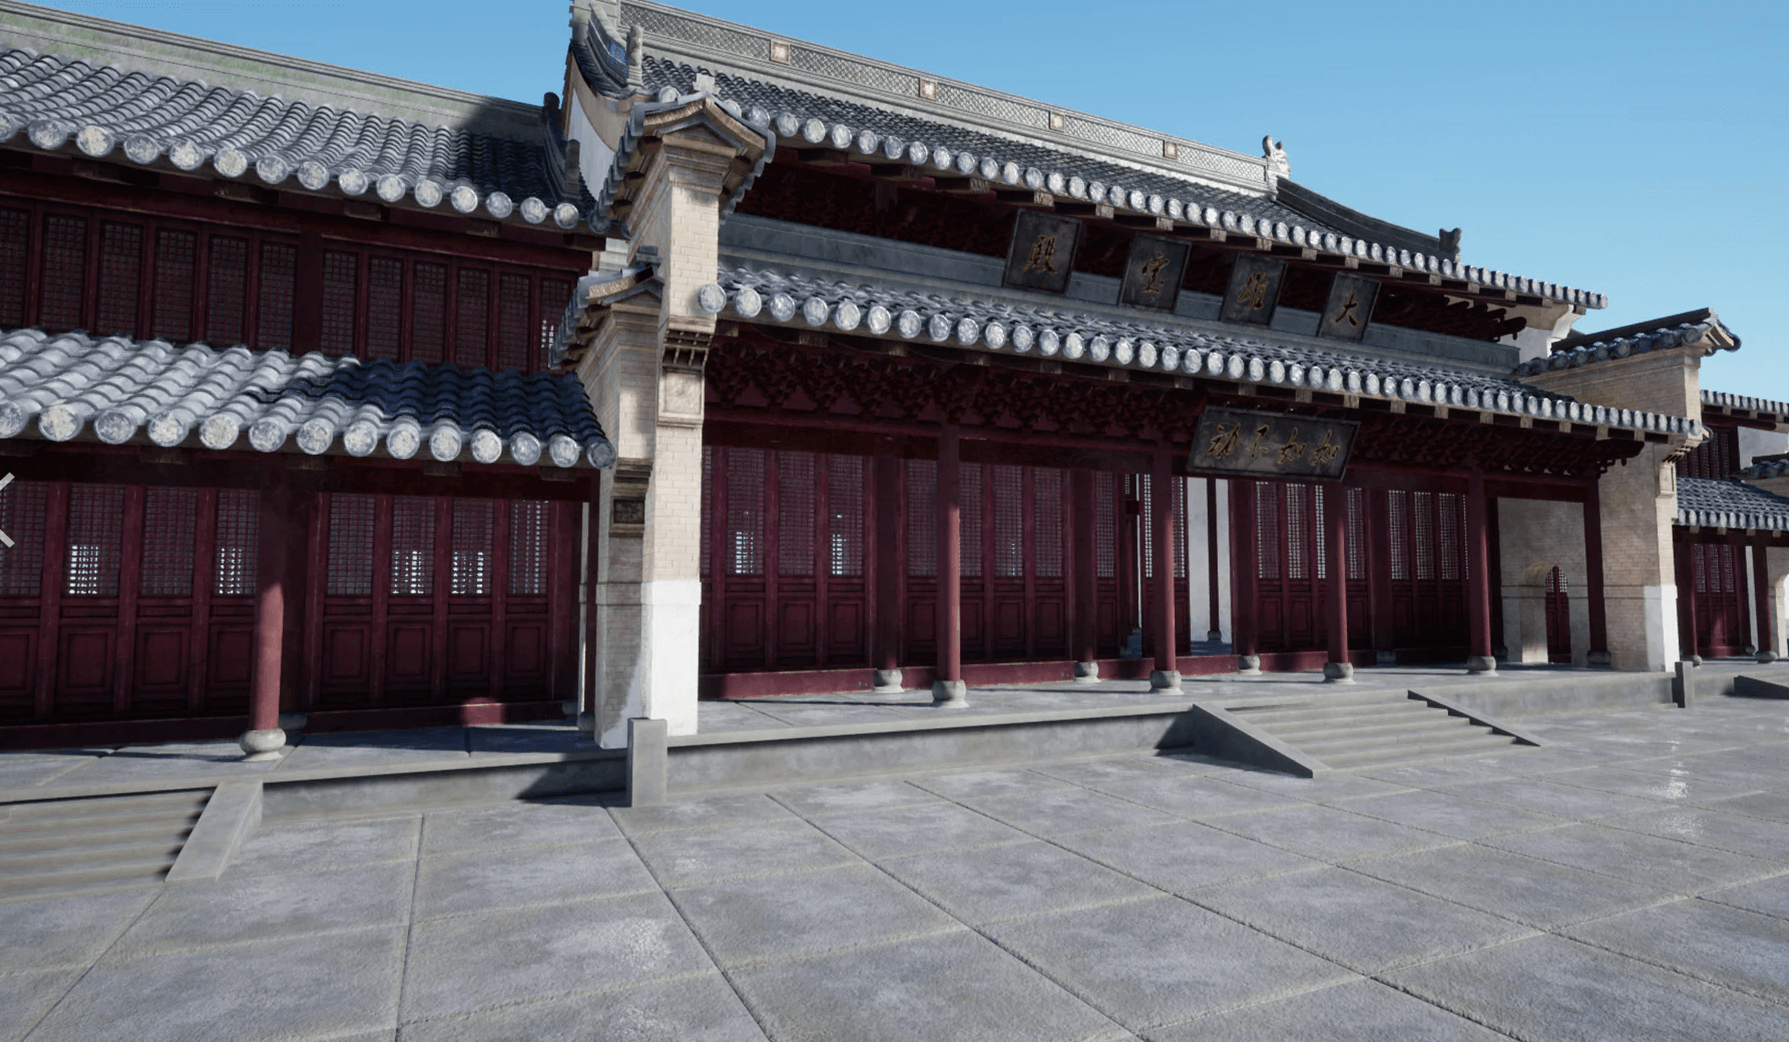 【UE4/5】中国模块化寺庙 – China Modular Temple